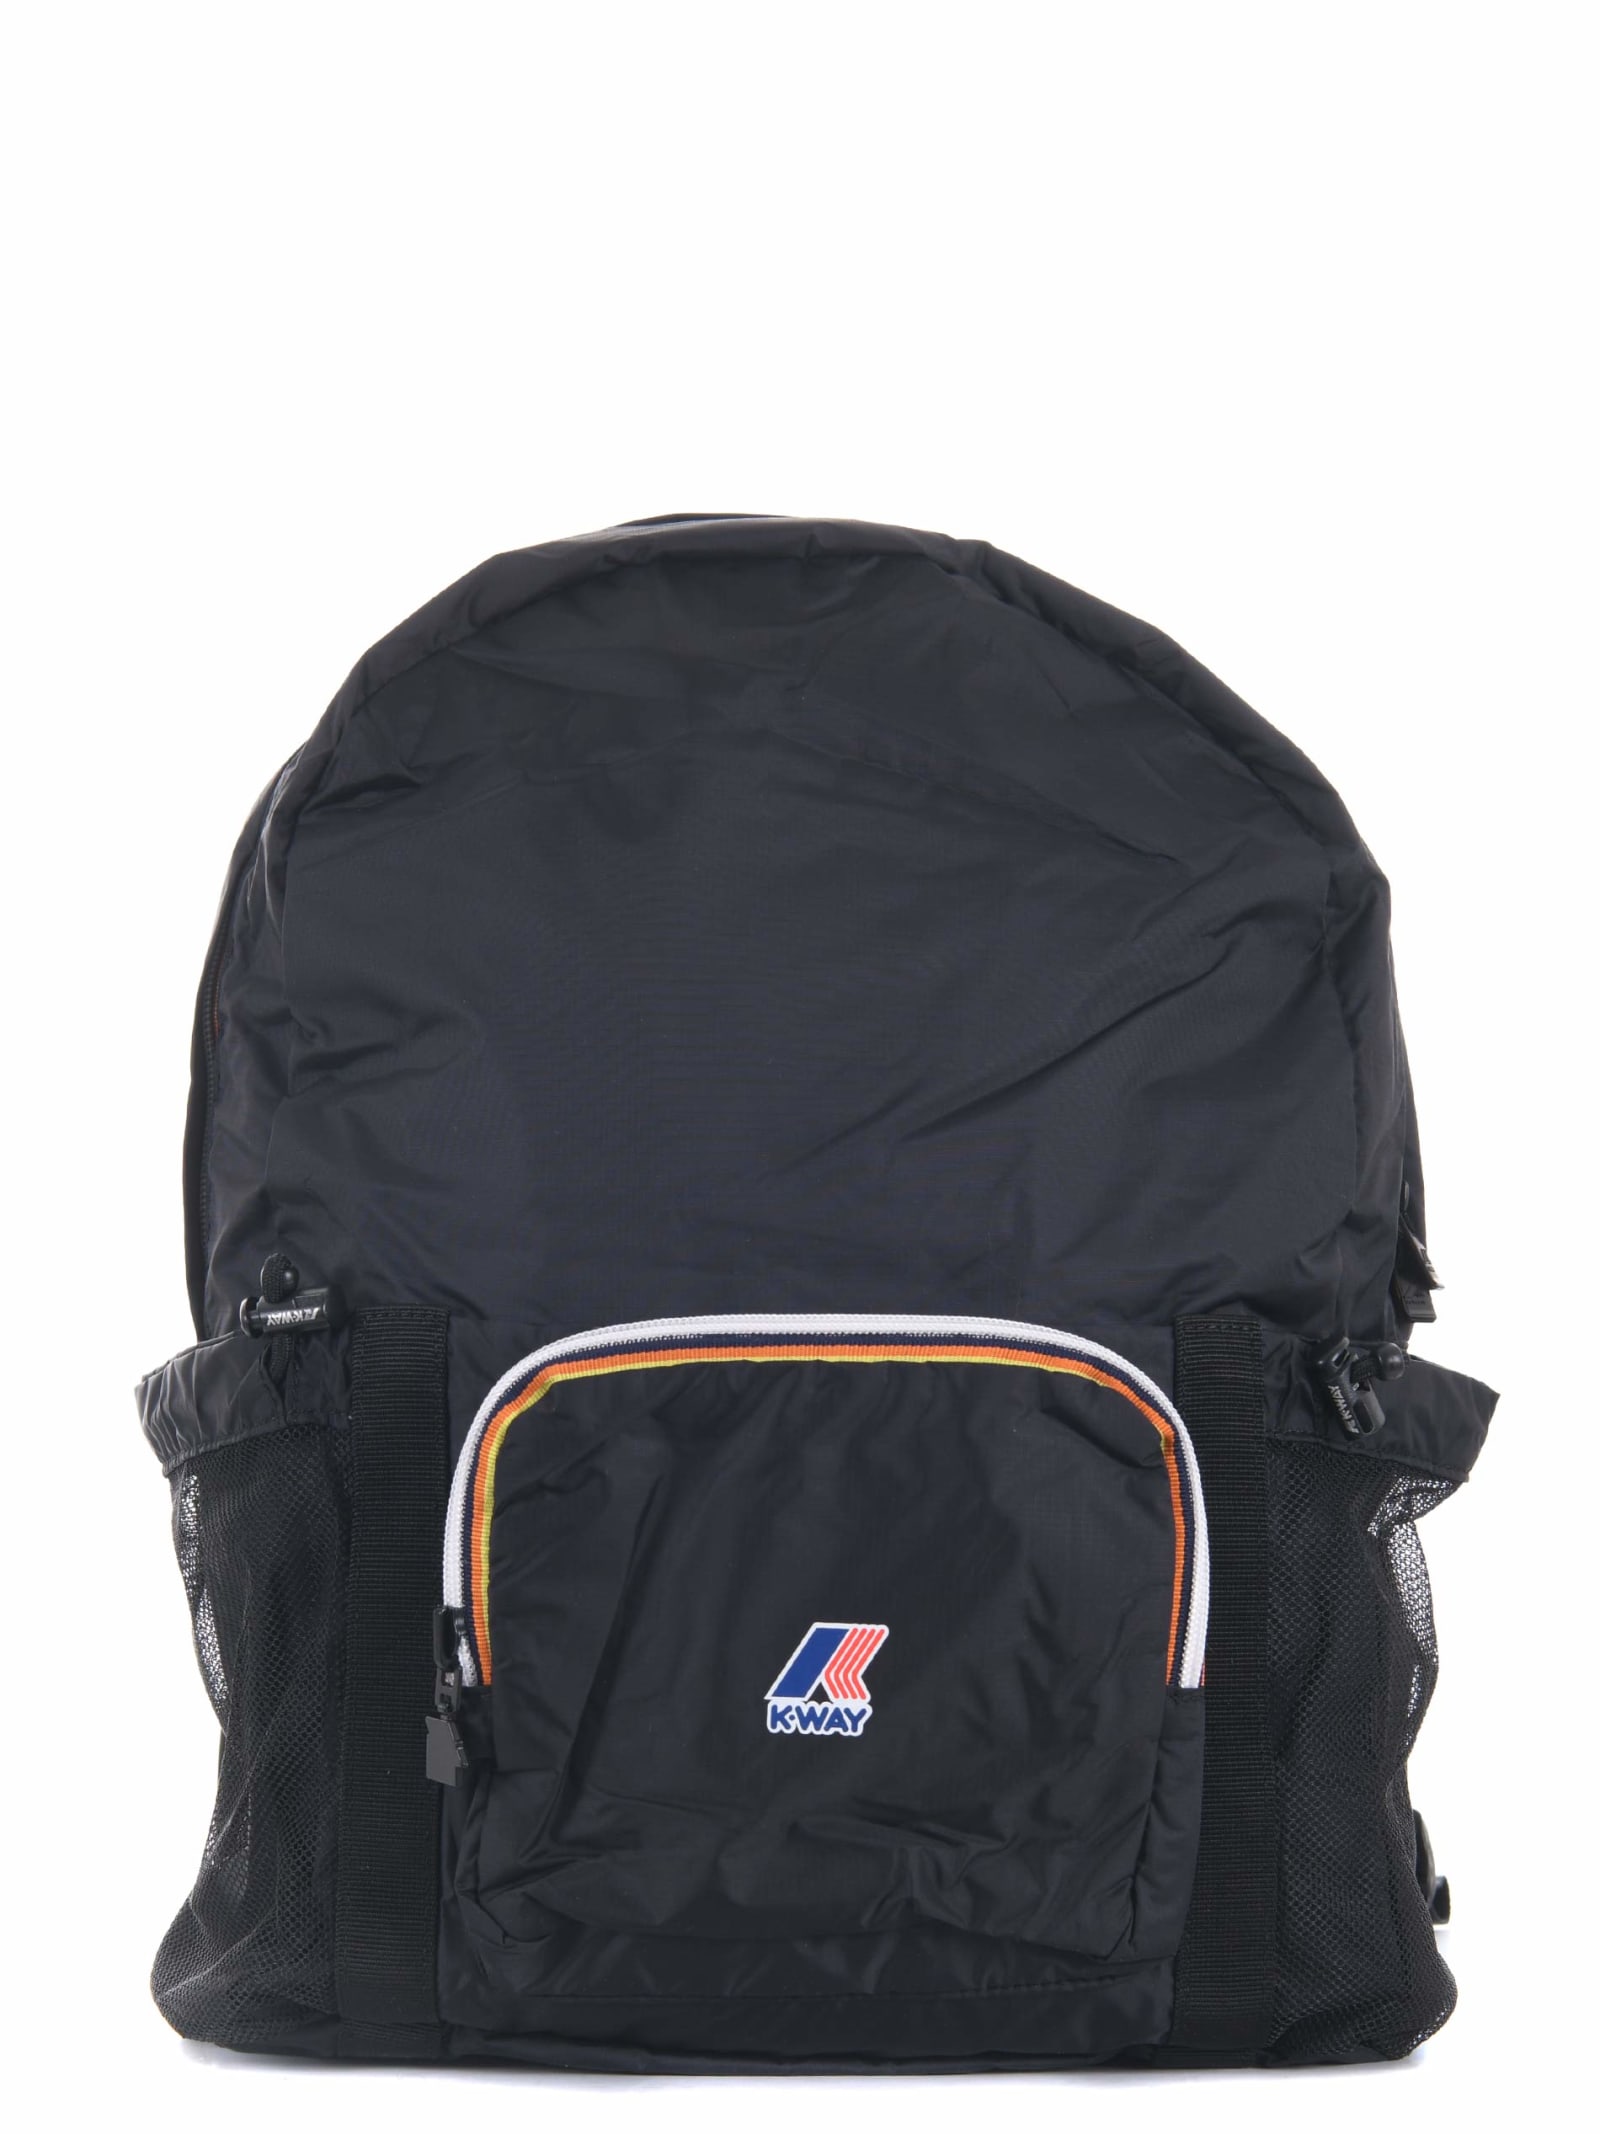 K-way Backpack